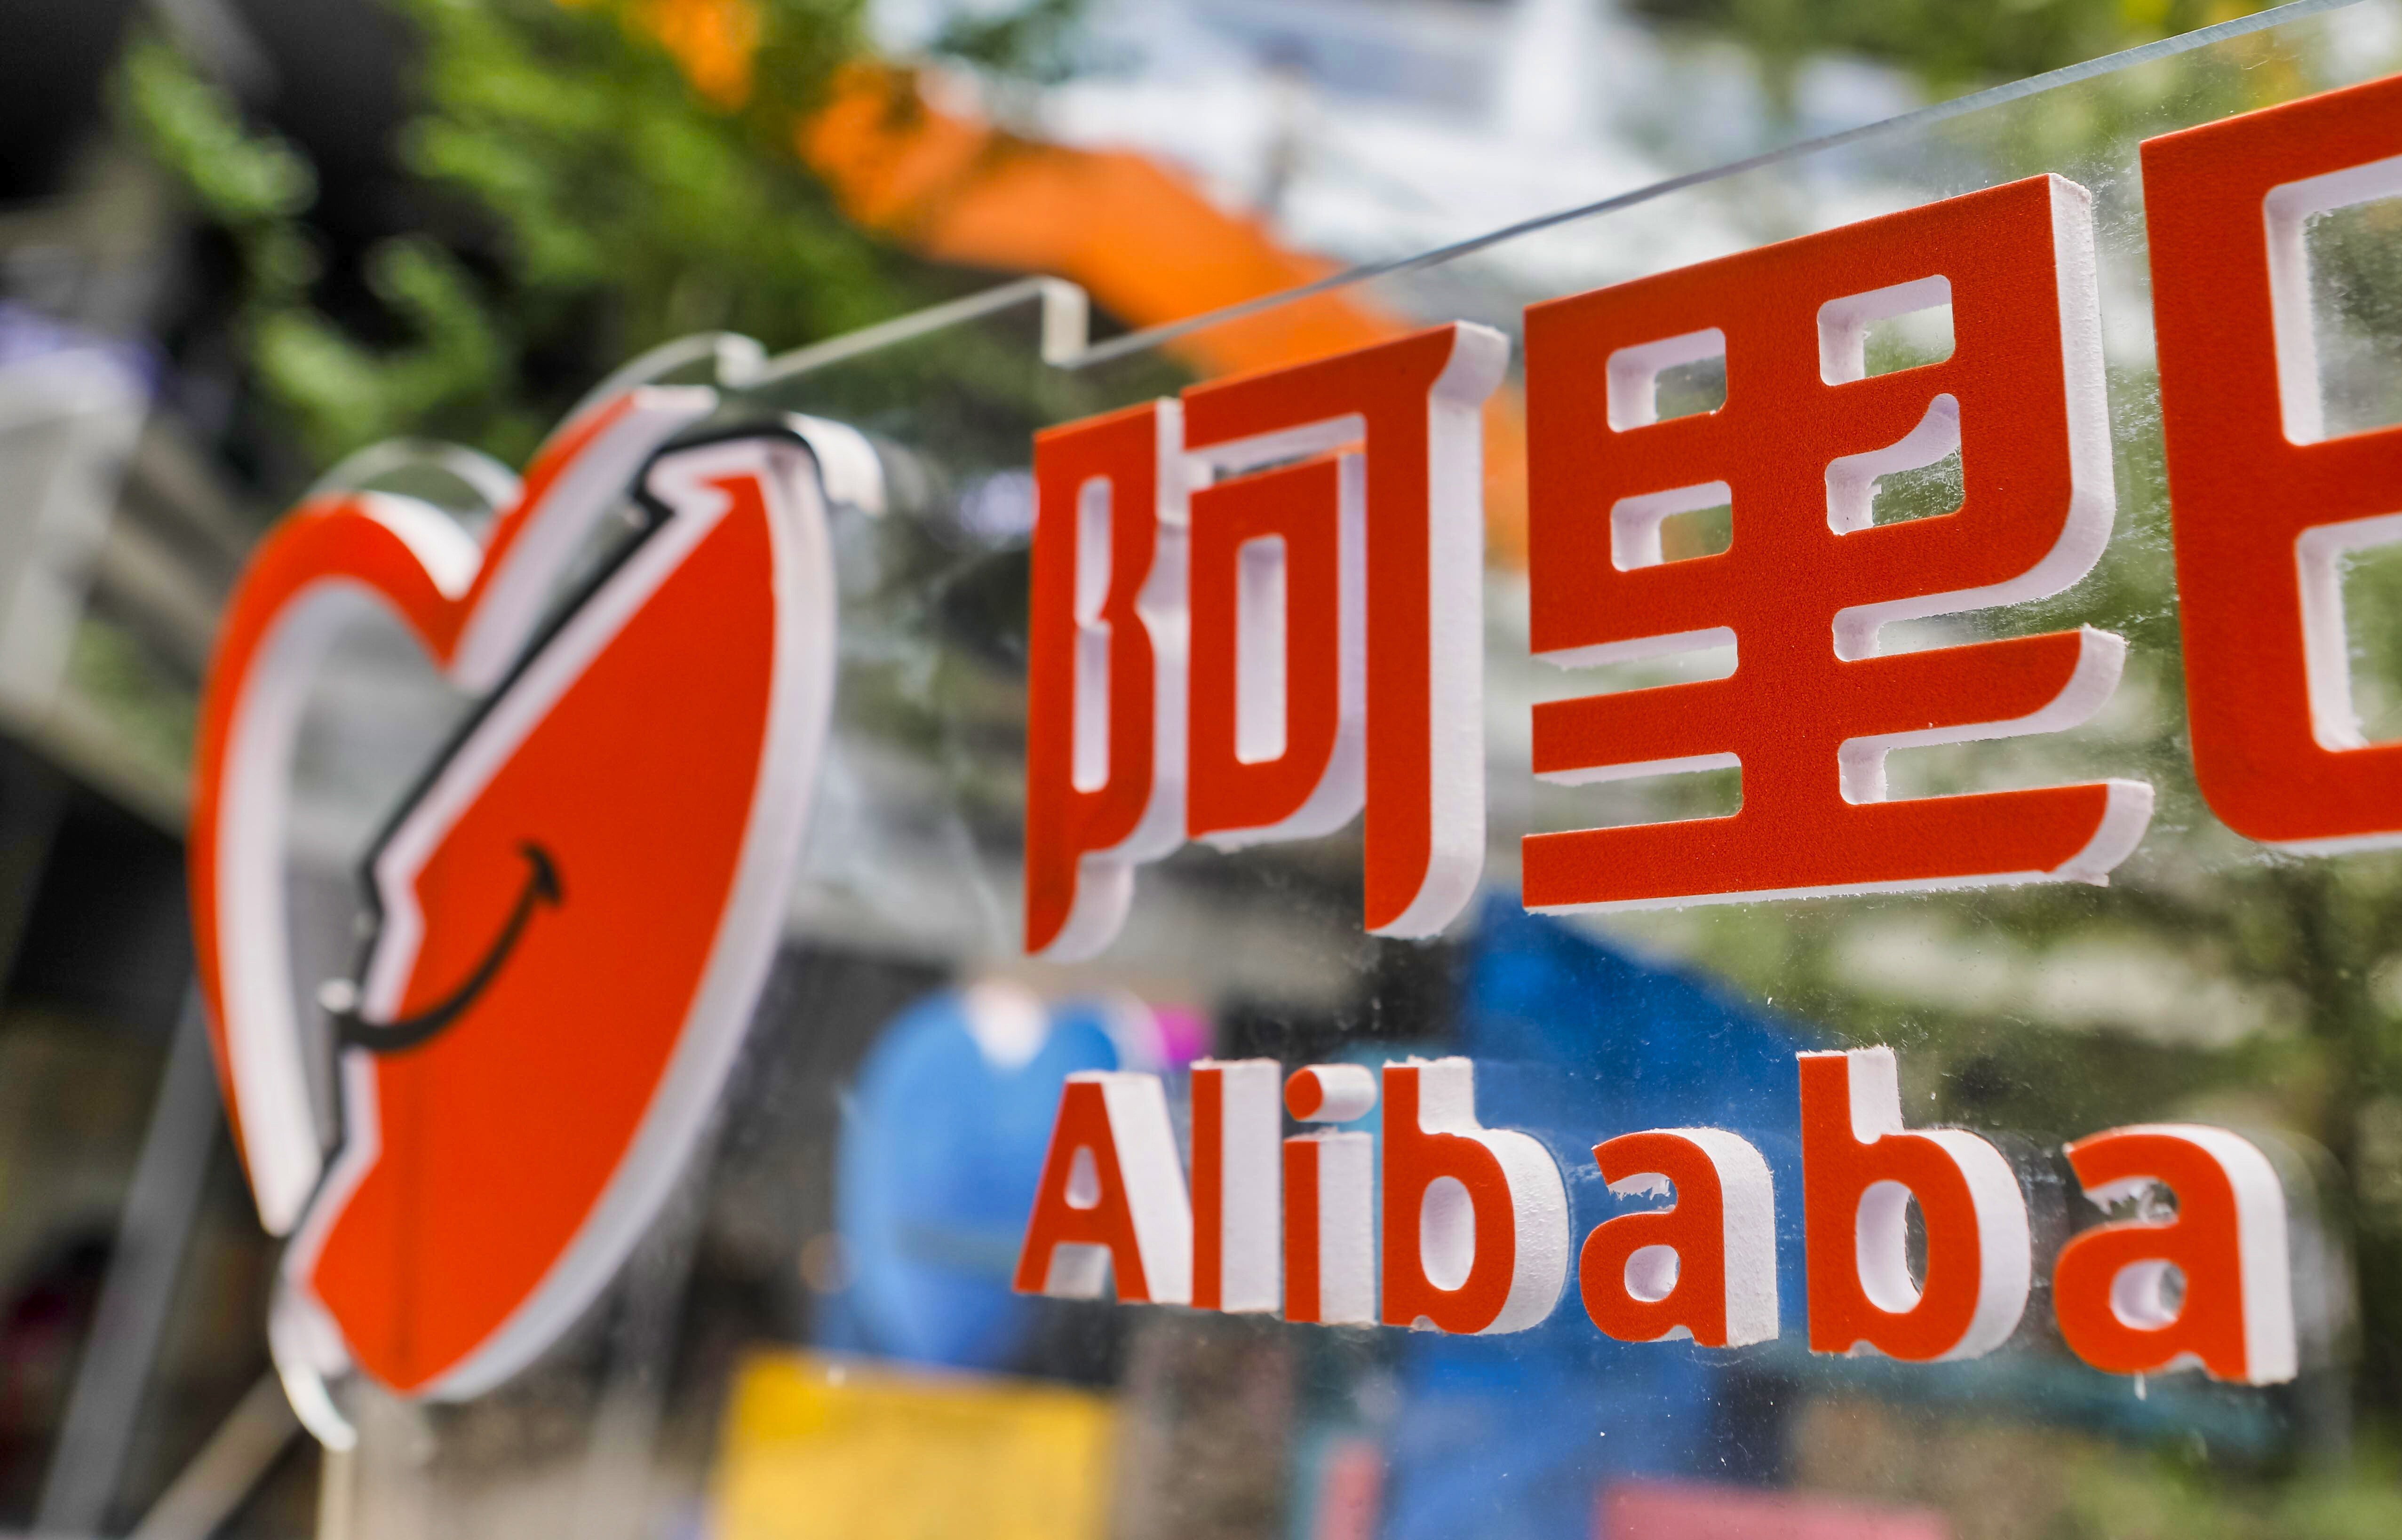 Alibaba’s building in Shanghai. Photo: EPA-EFE